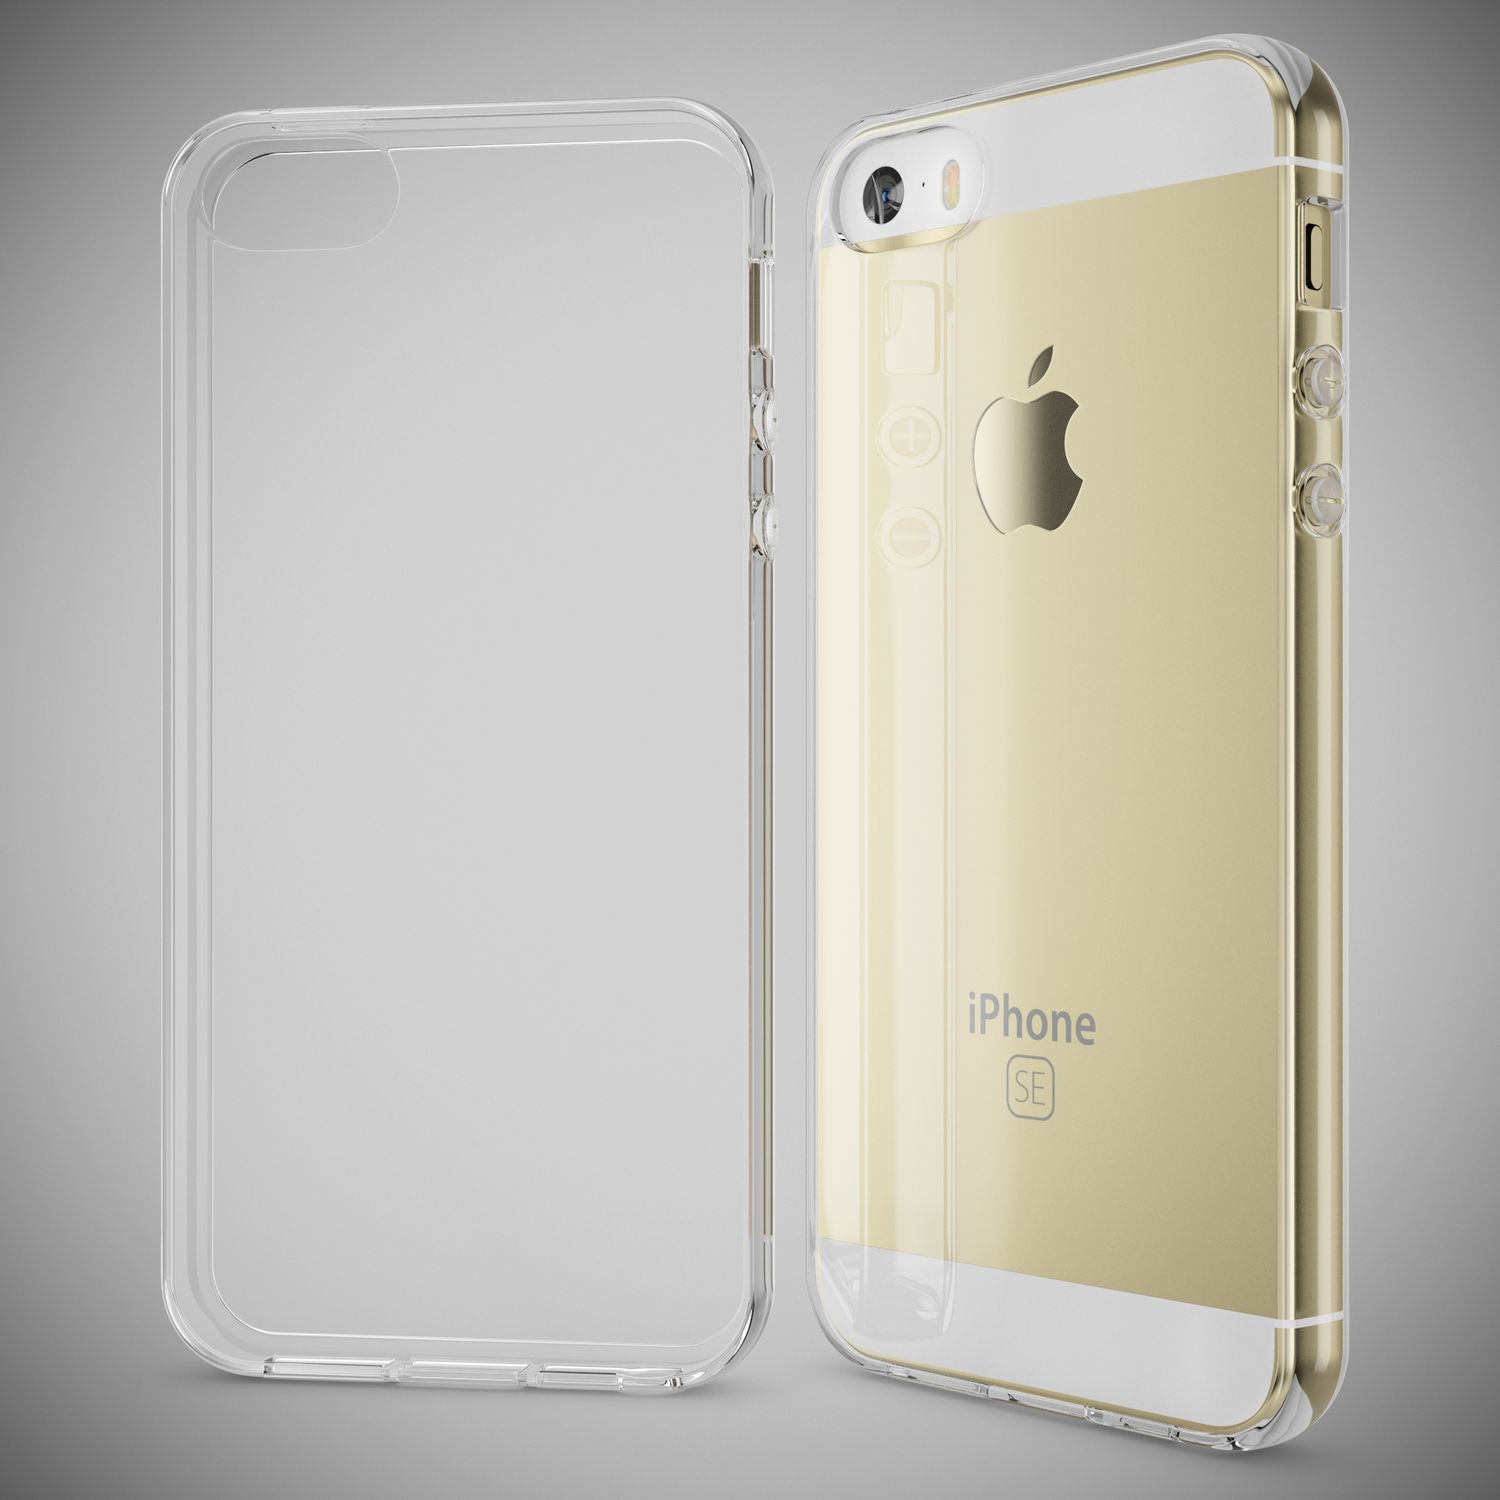 NALIA Klar Transparente Silikon iPhone SE Backcover, Hülle, Generation) (1. 5 5s, iPhone Apple, Transparent iPhone